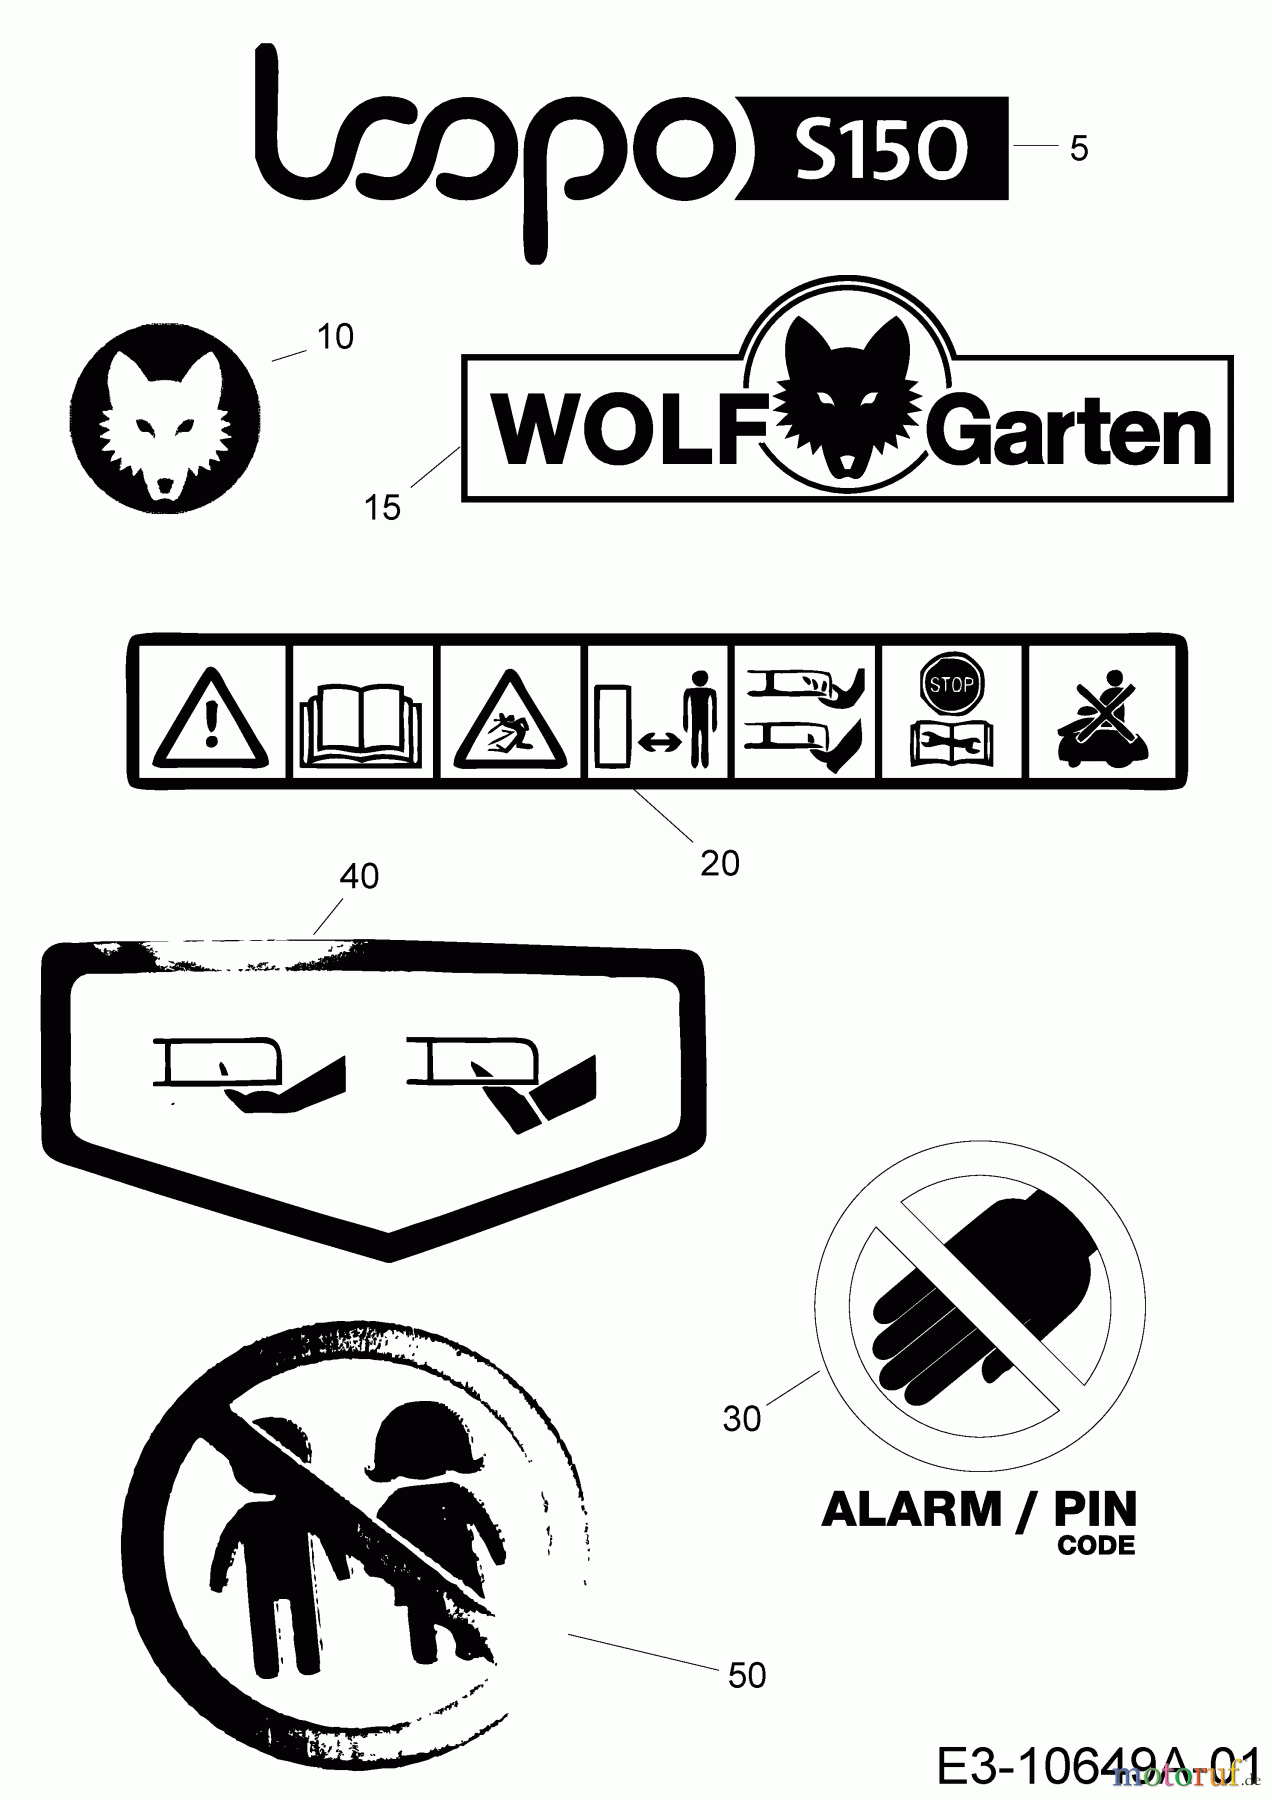  Wolf-Garten Mähroboter Loopo S150 22AXBACA650 (2020) Aufkleber